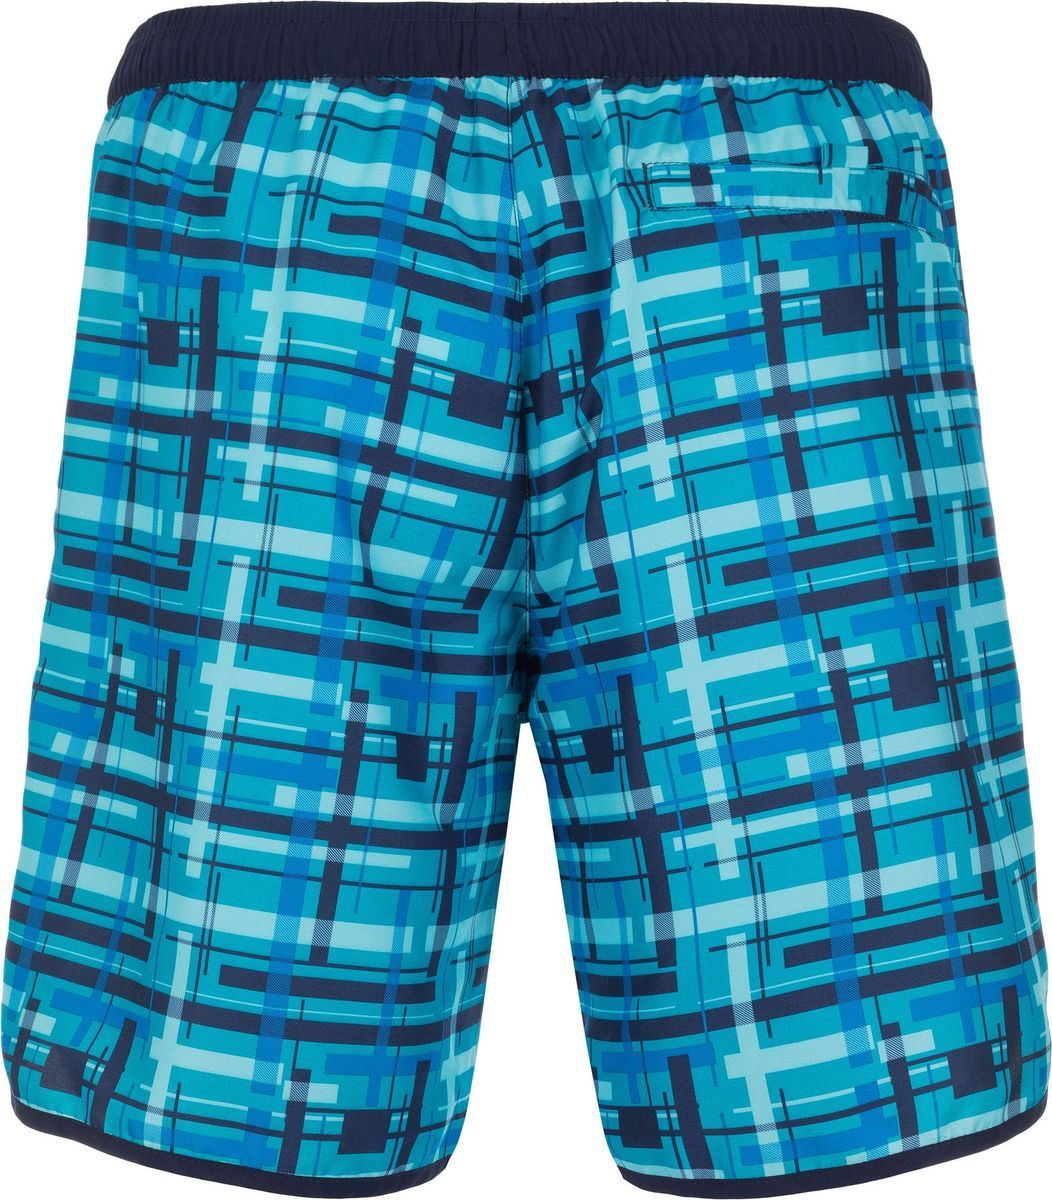   Joss Men's Shorts, . S17AJSSHM02-MU.  52